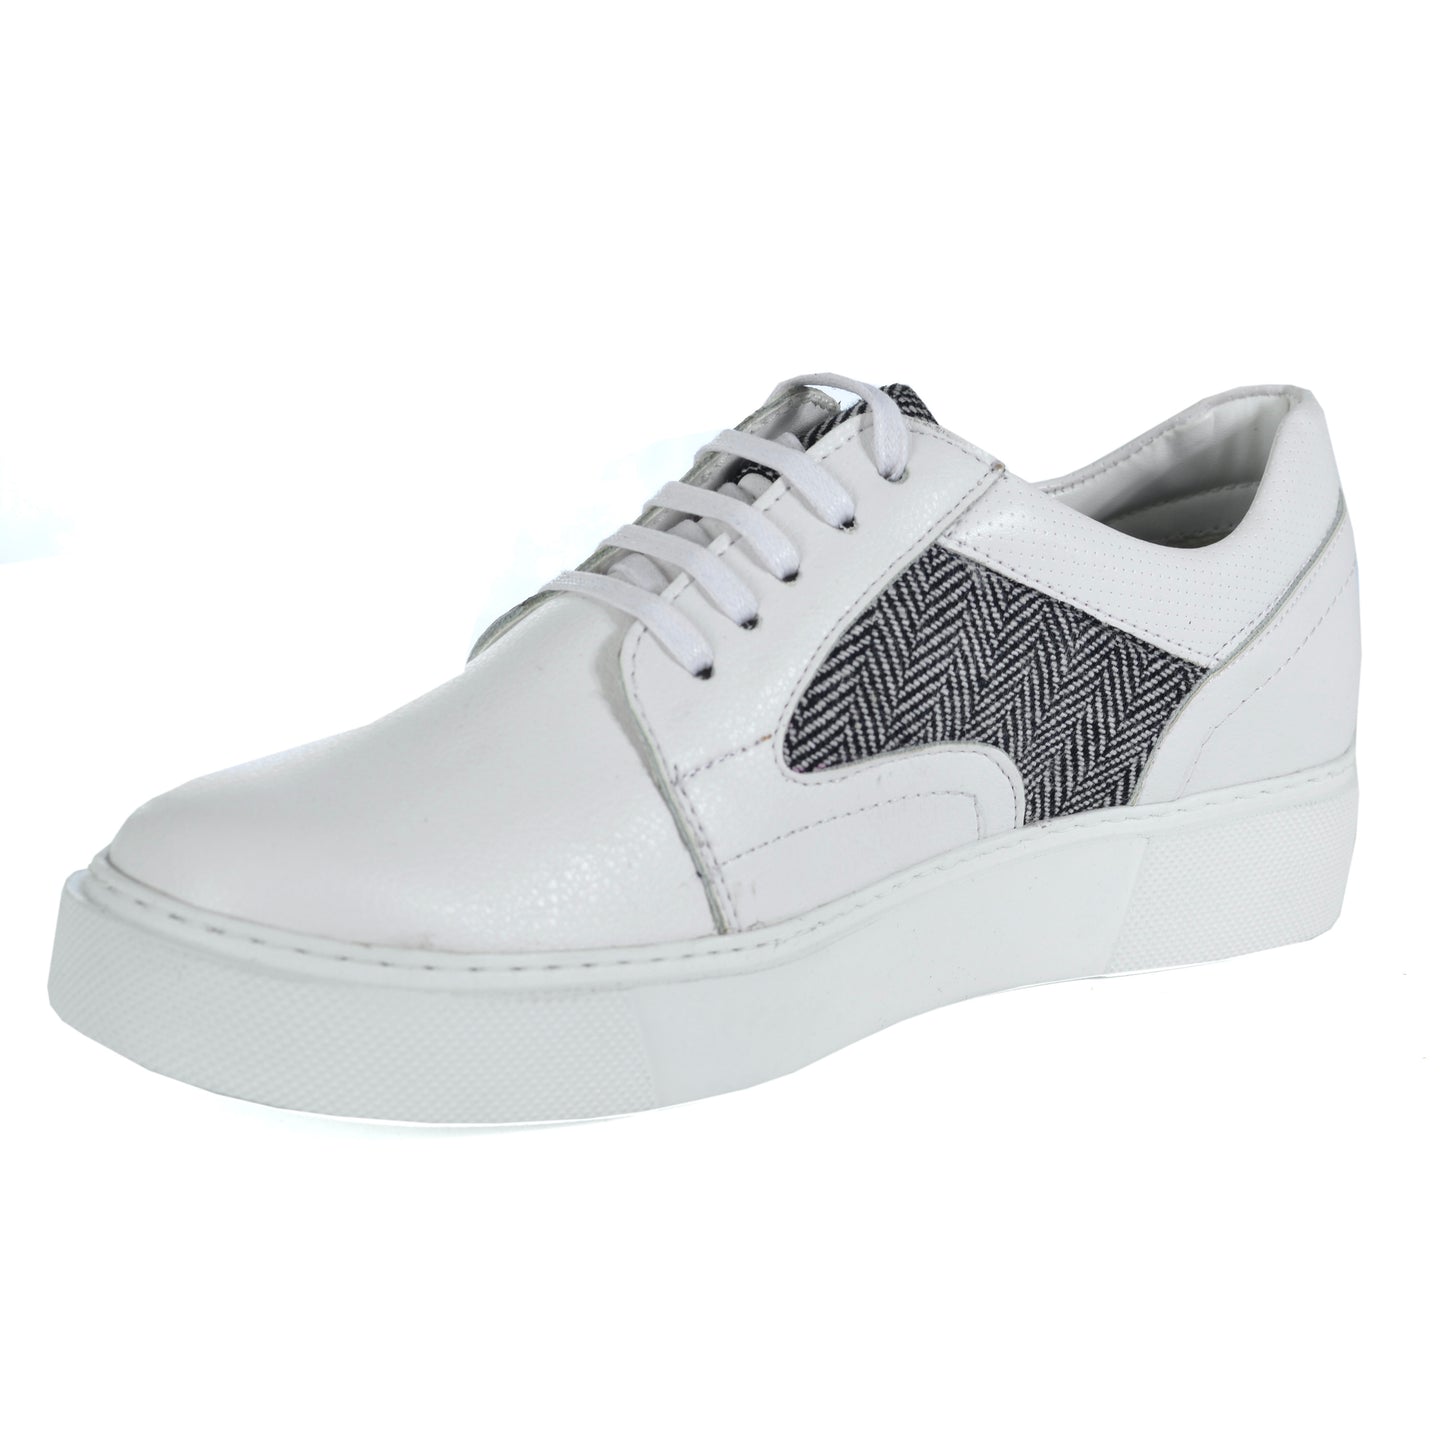 SALE! 2H 9015 White/Gray Sport Shoes